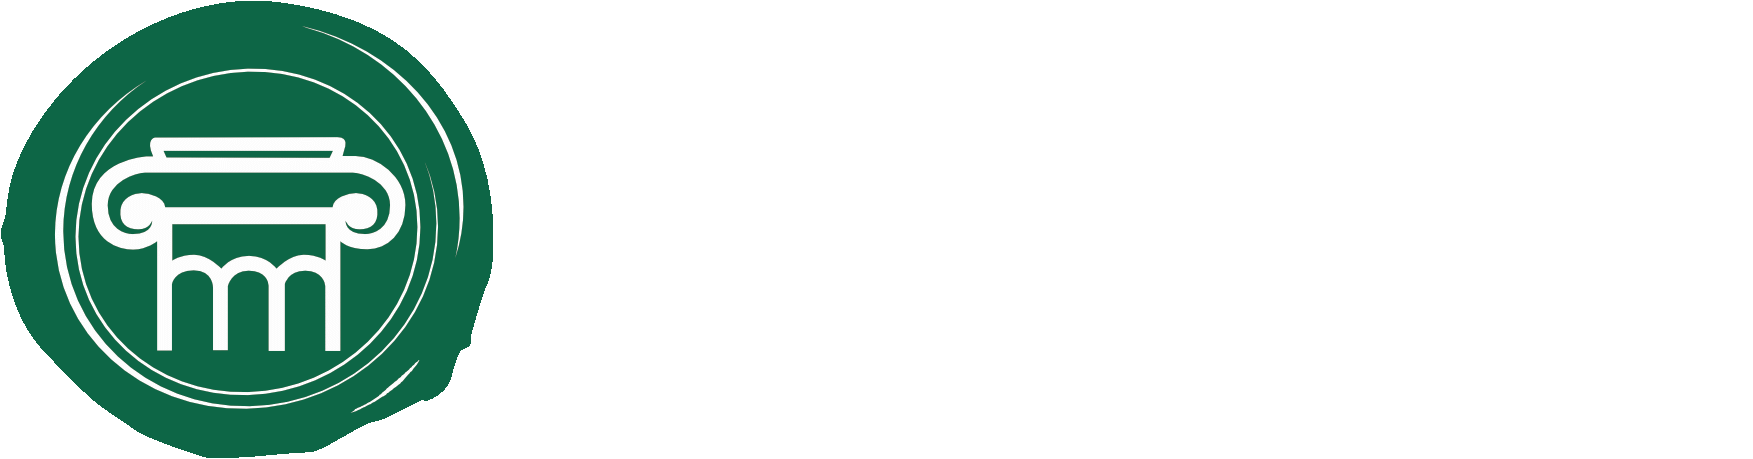 Prota Financial home page